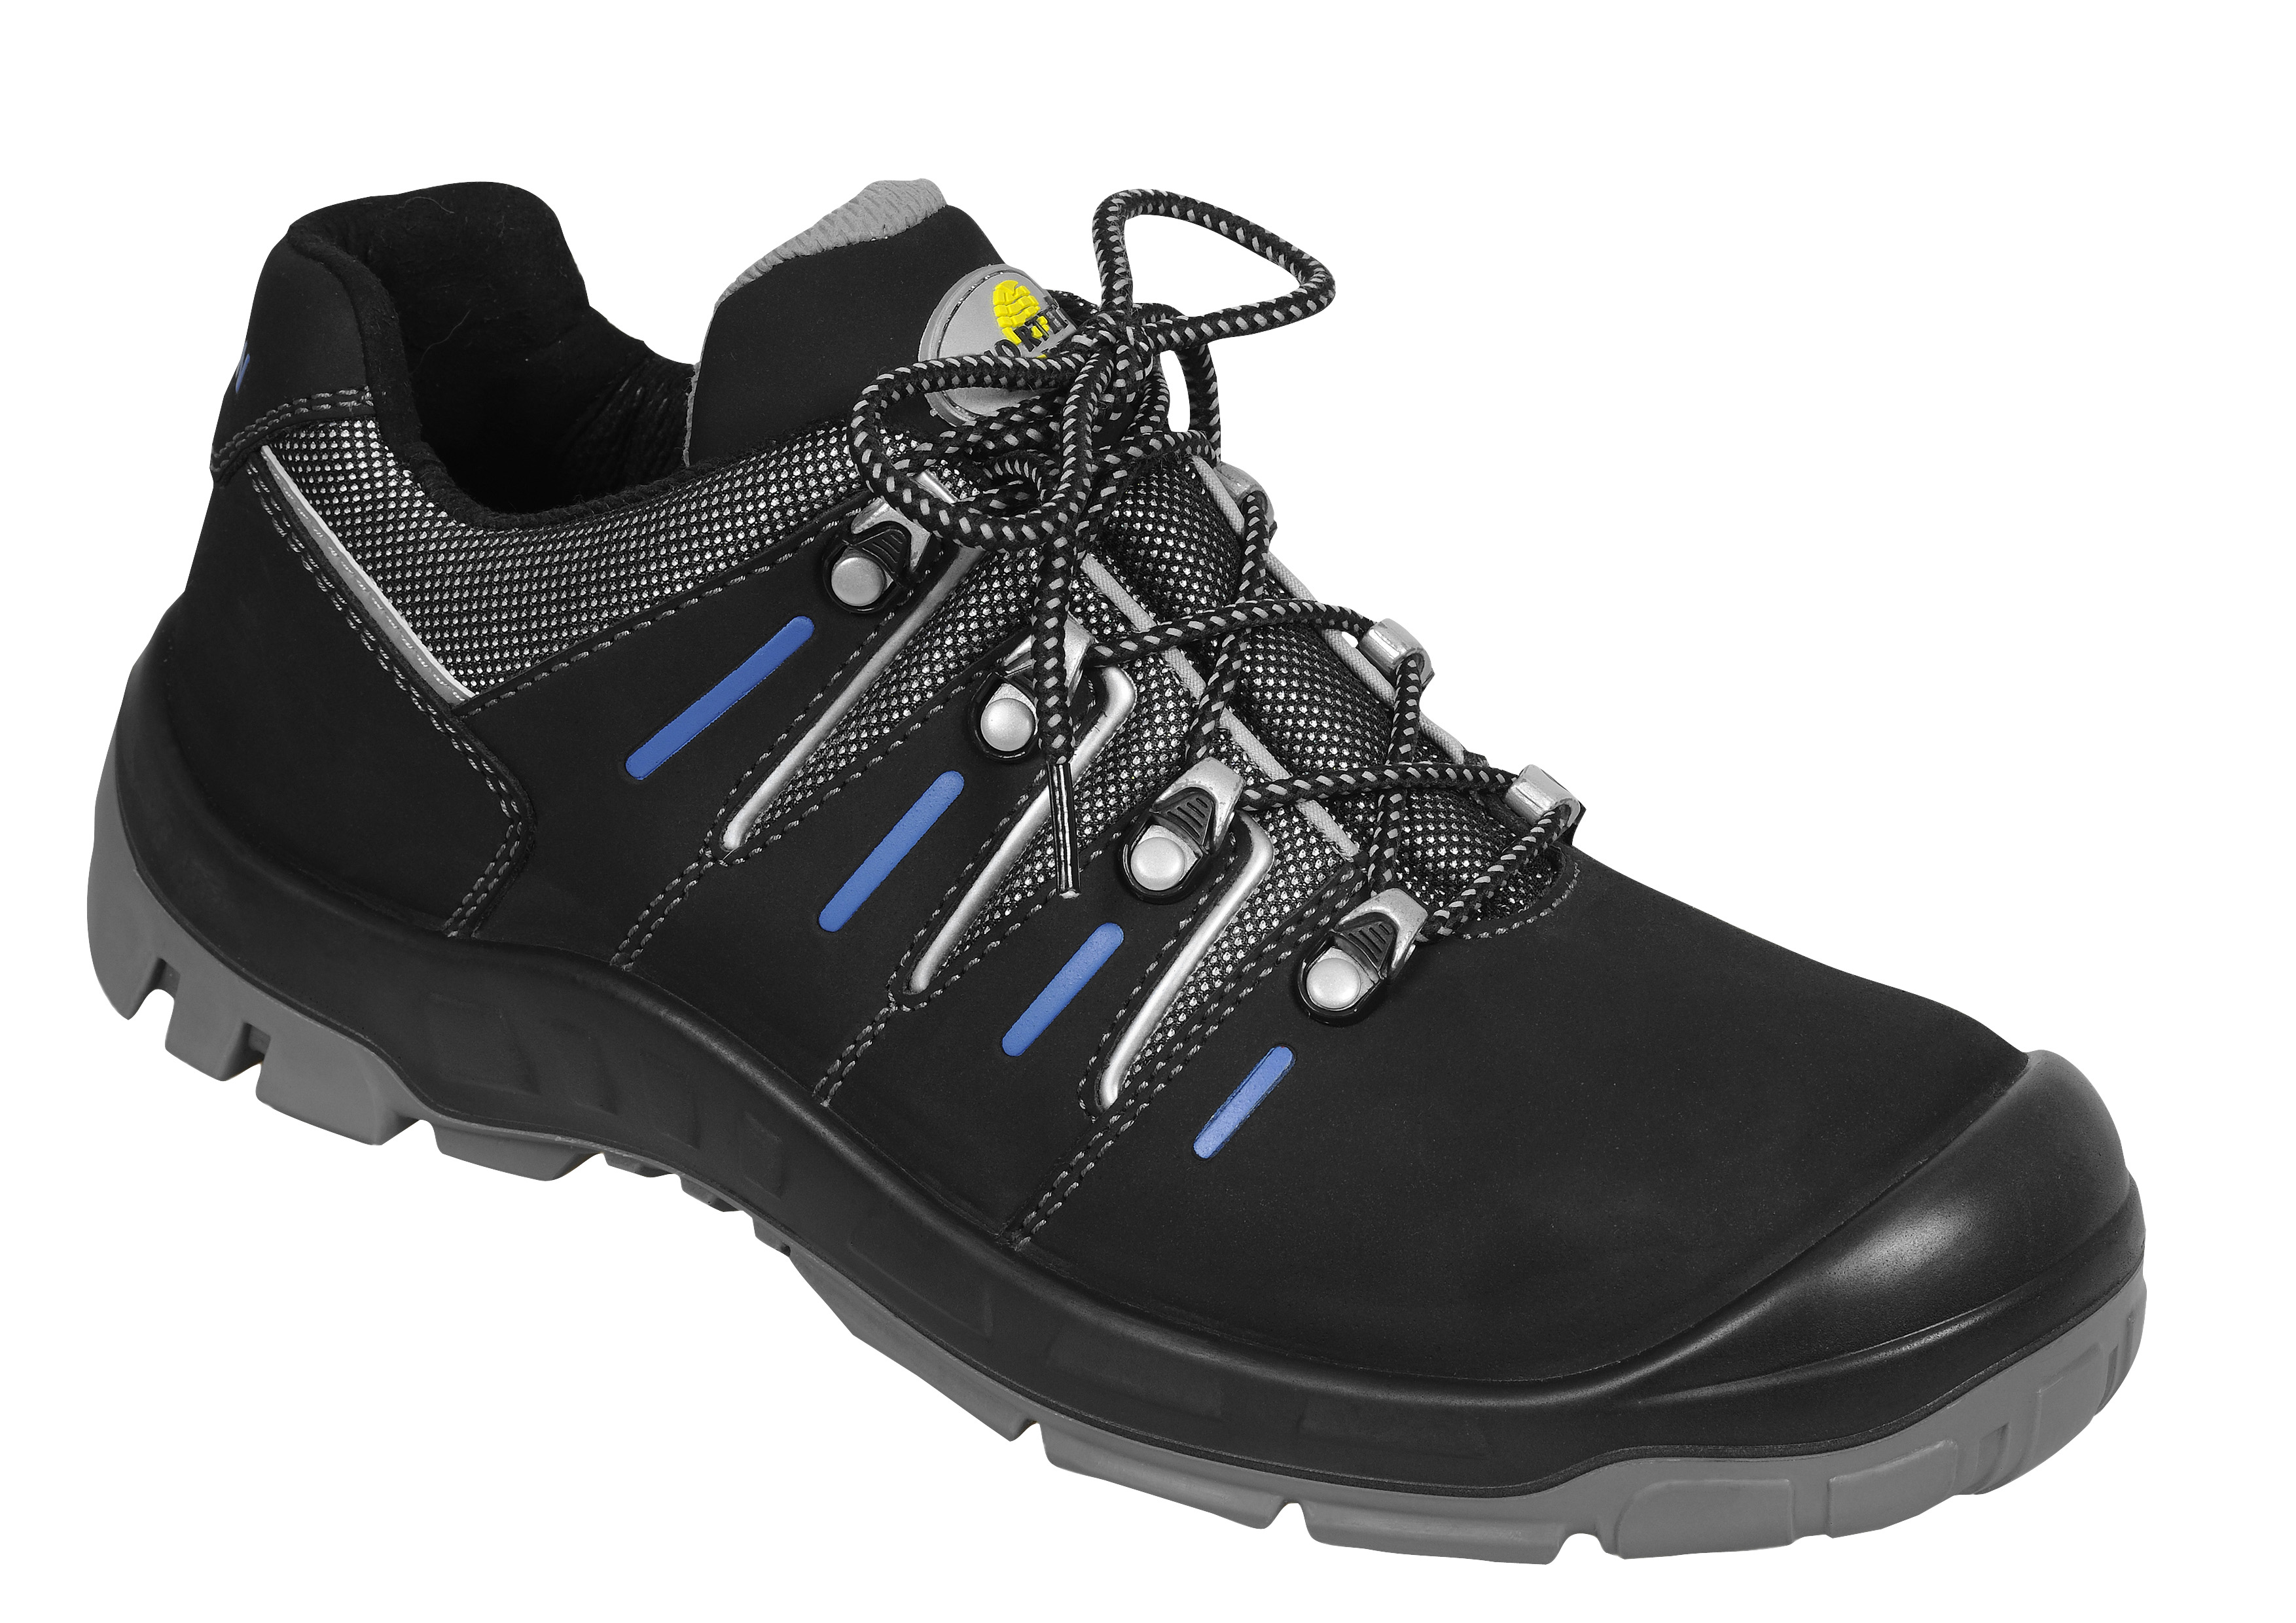 WORTEC-Footwear, S1P-Sicherheits-Arbeits-Berufs-Schuhe, Halbschuhe, MANOLO, schwarz/grau/blau